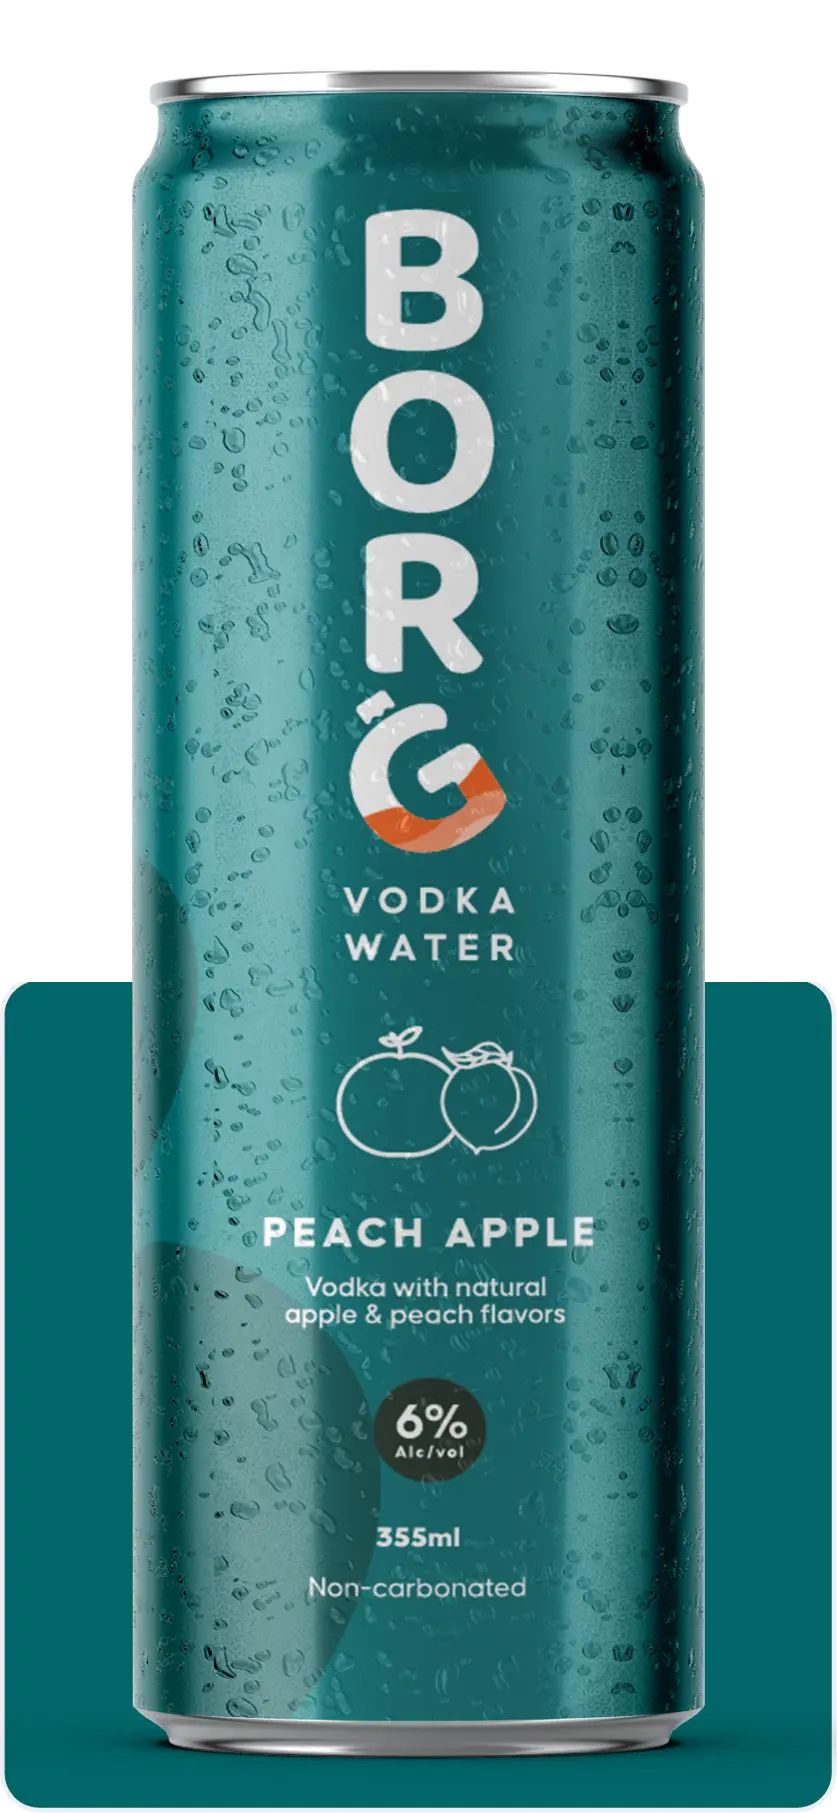 BORG Bodka Water - Peach Apple Flavor